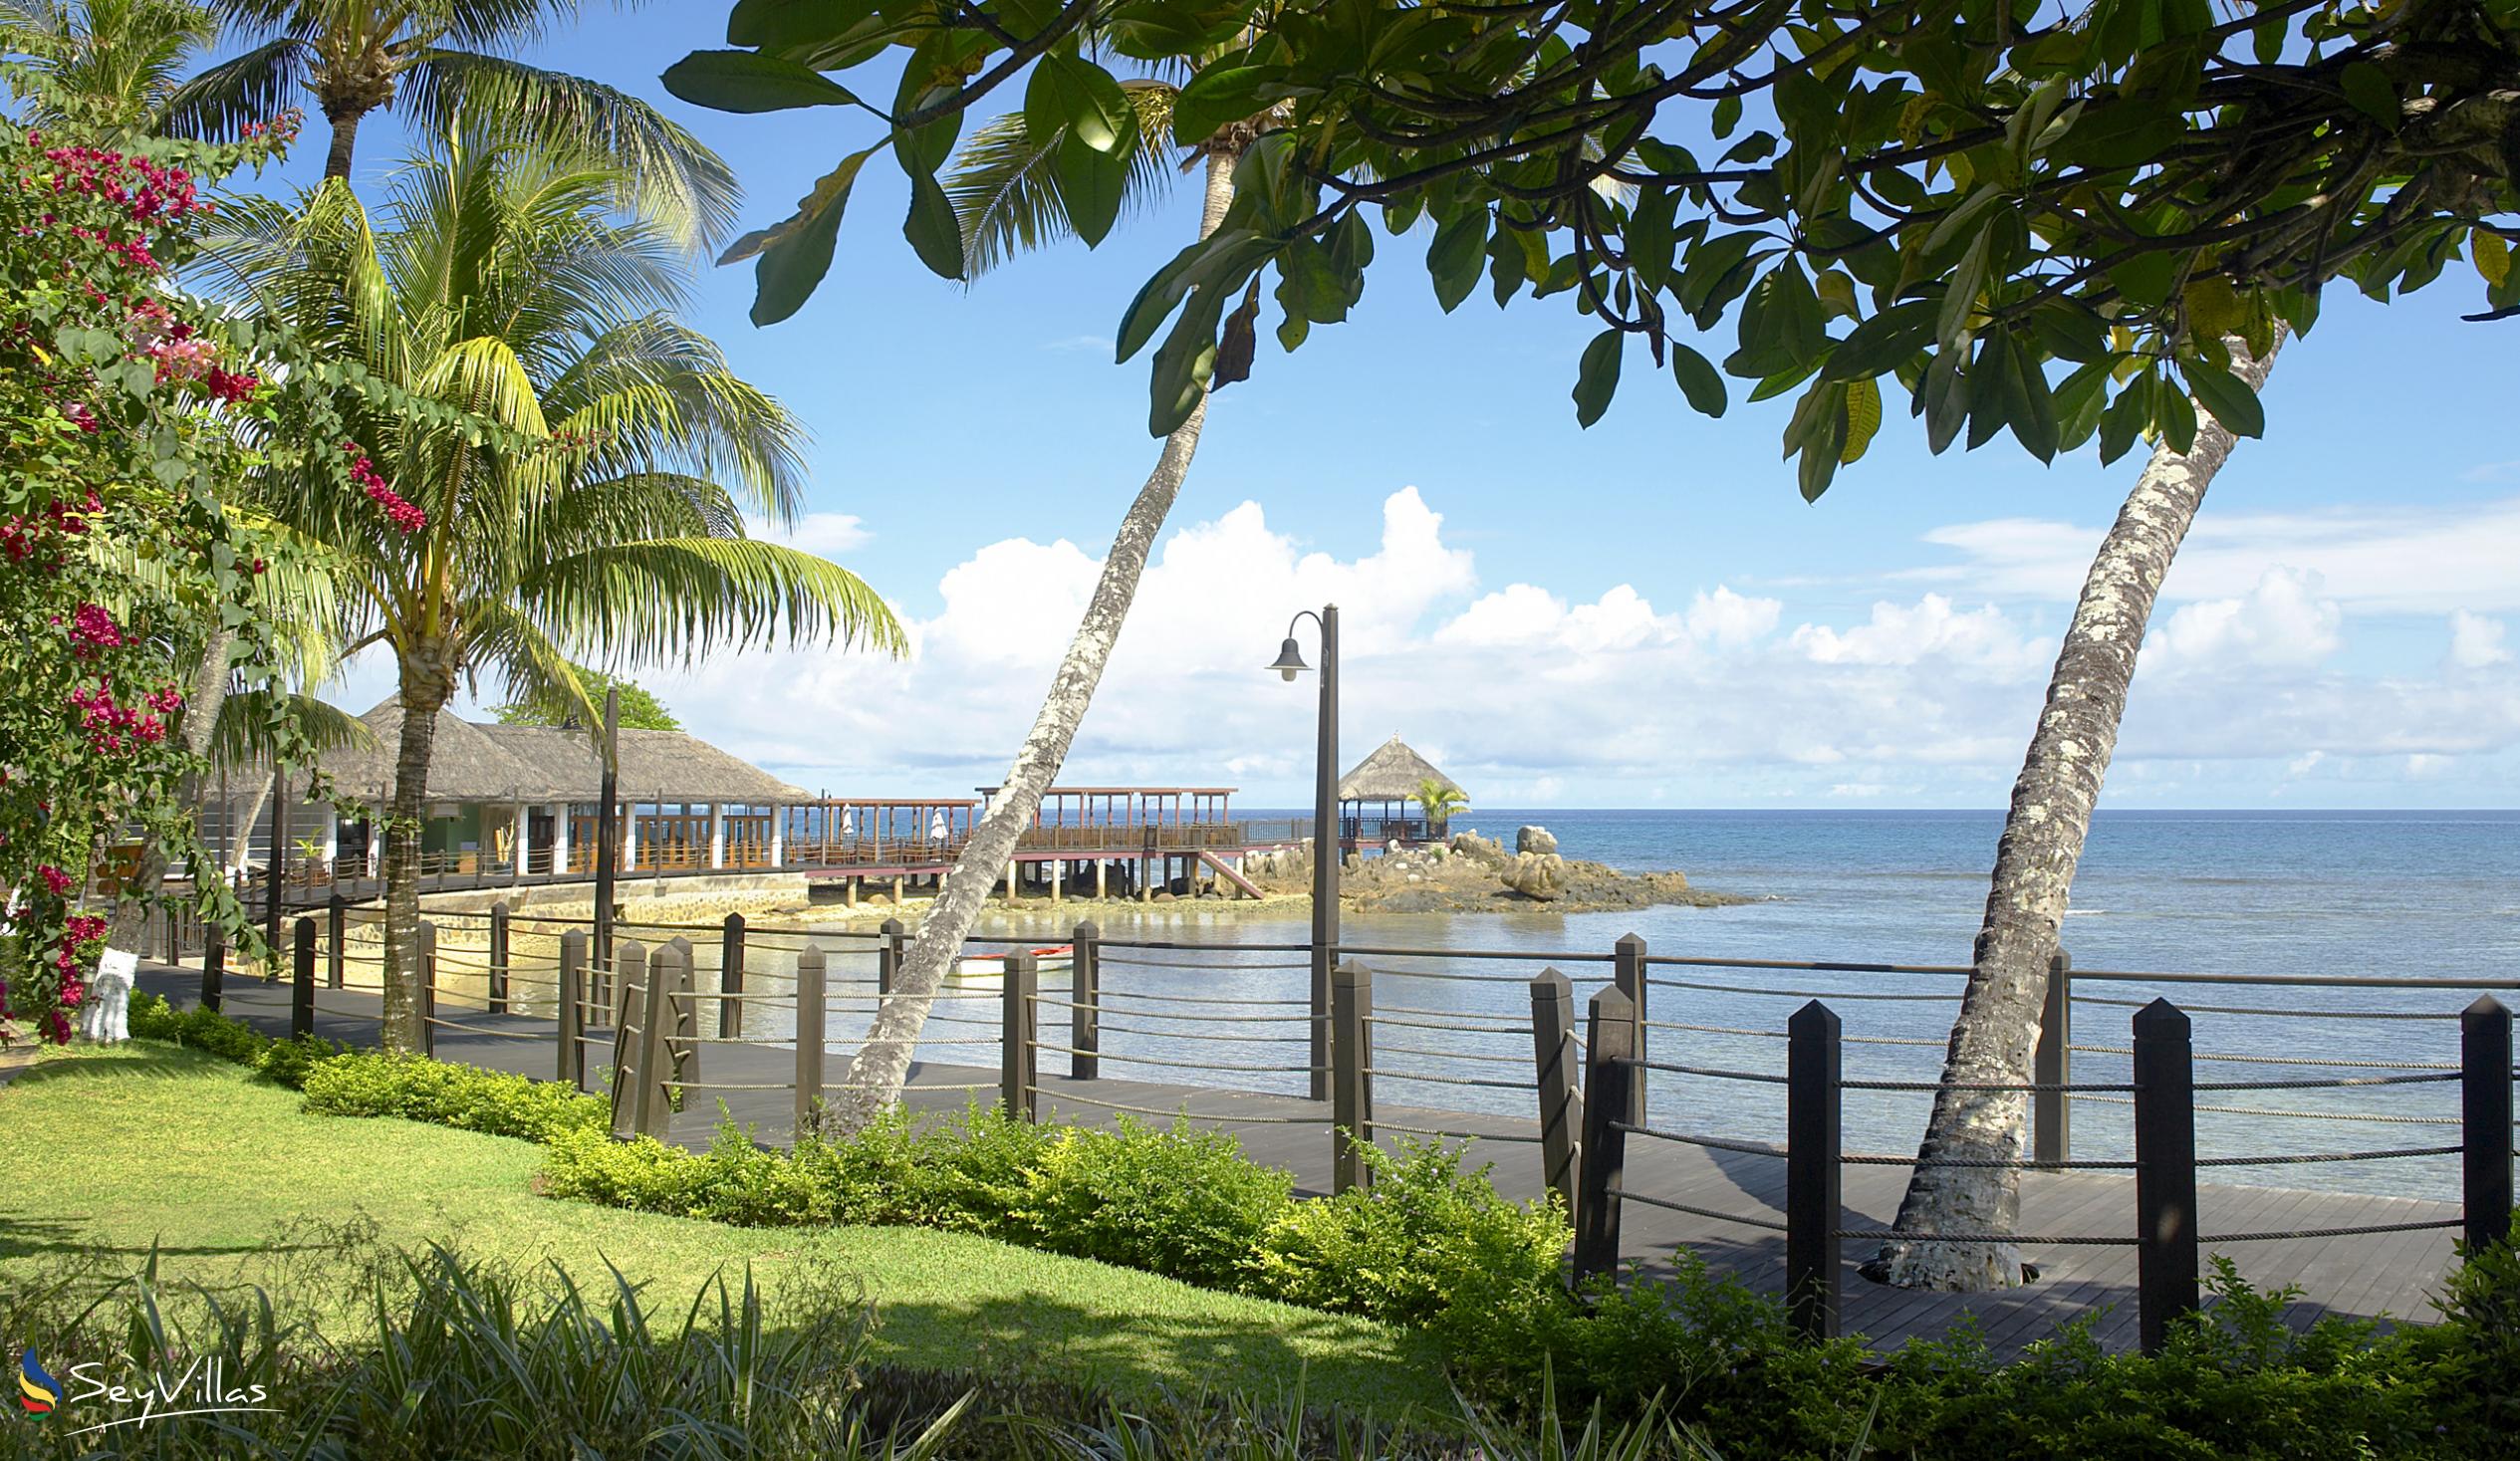 Foto 3: Fisherman's Cove Resort - Aussenbereich - Mahé (Seychellen)